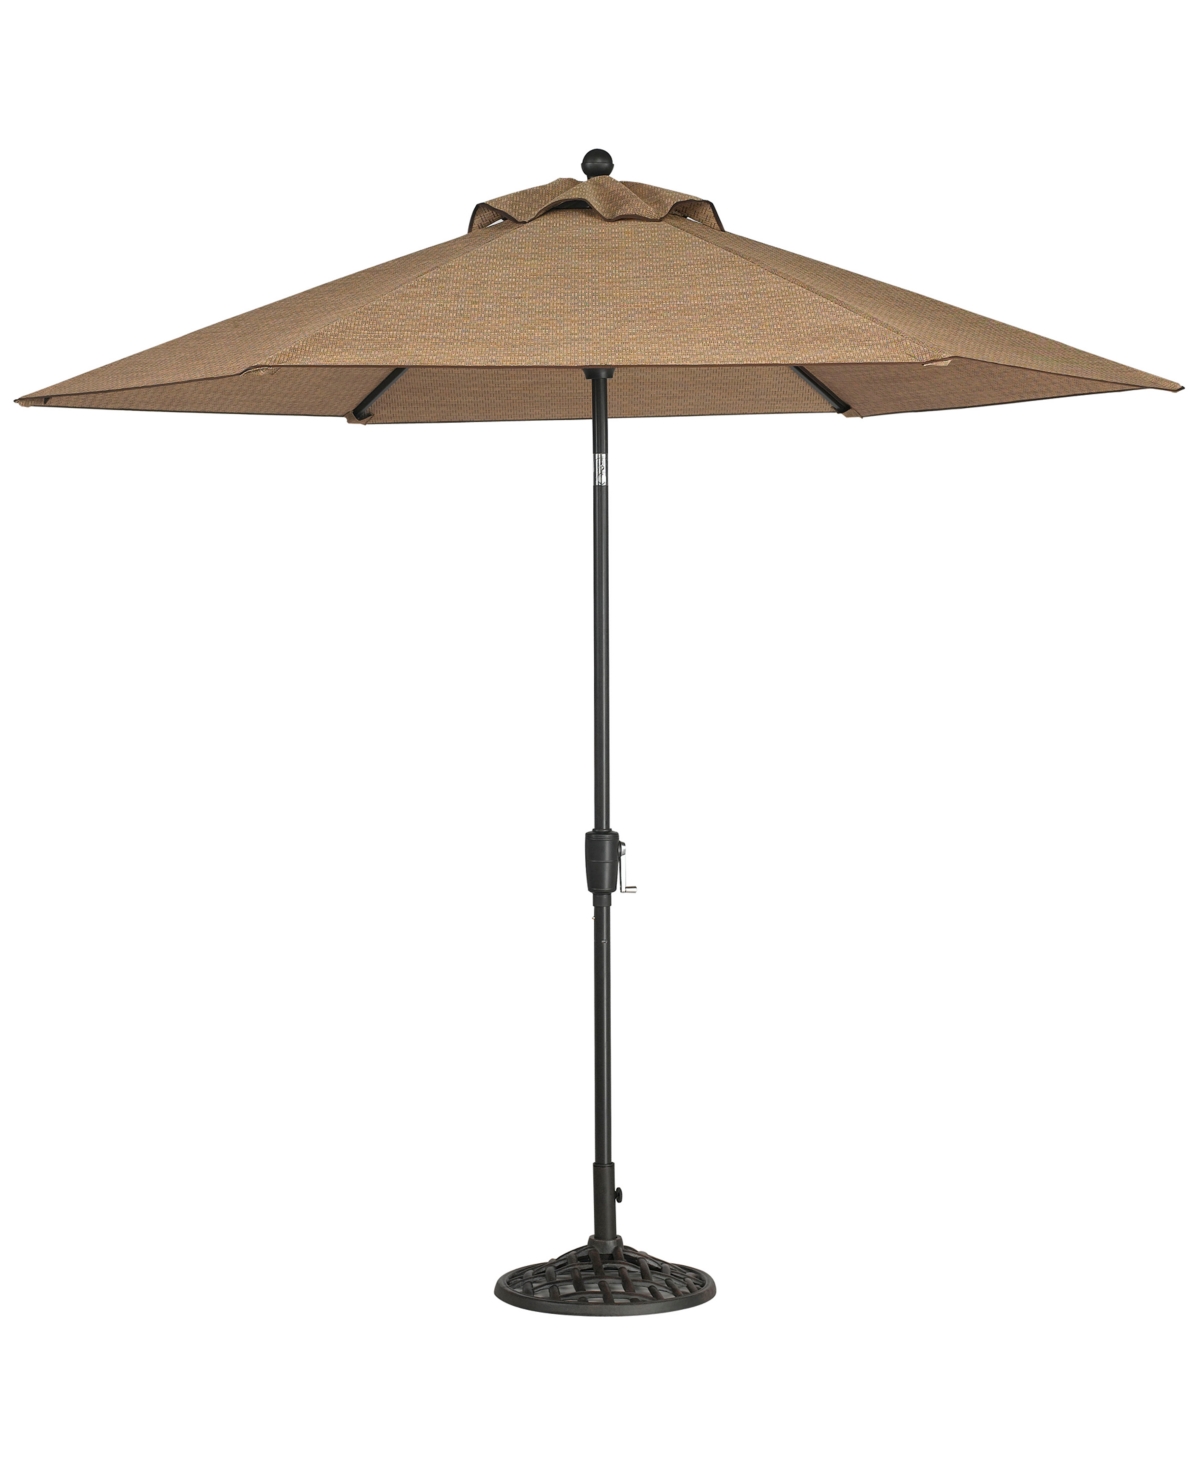 Beachmont Ii Outdoor 9 Auto-Tilt Patio Umbrella with Base, Created for Macys